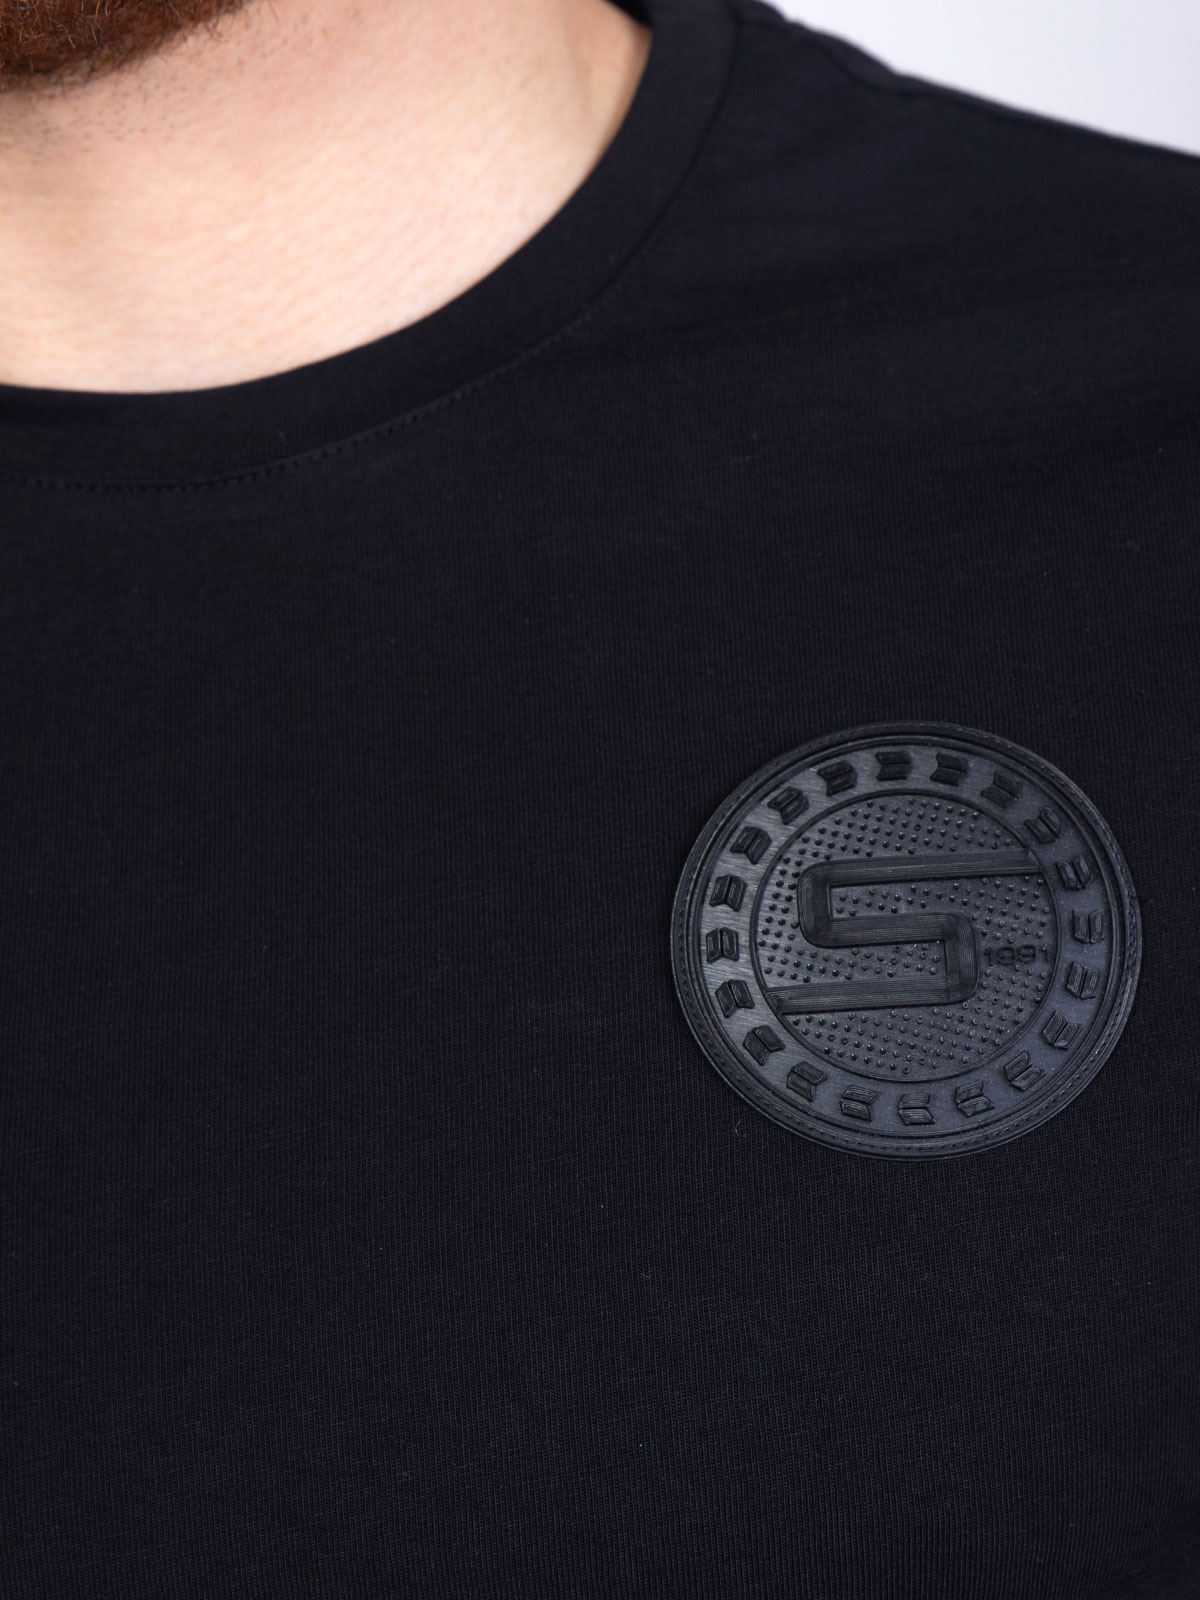 Black short sleeve blouse with badge - 96386 € 11.81 img3